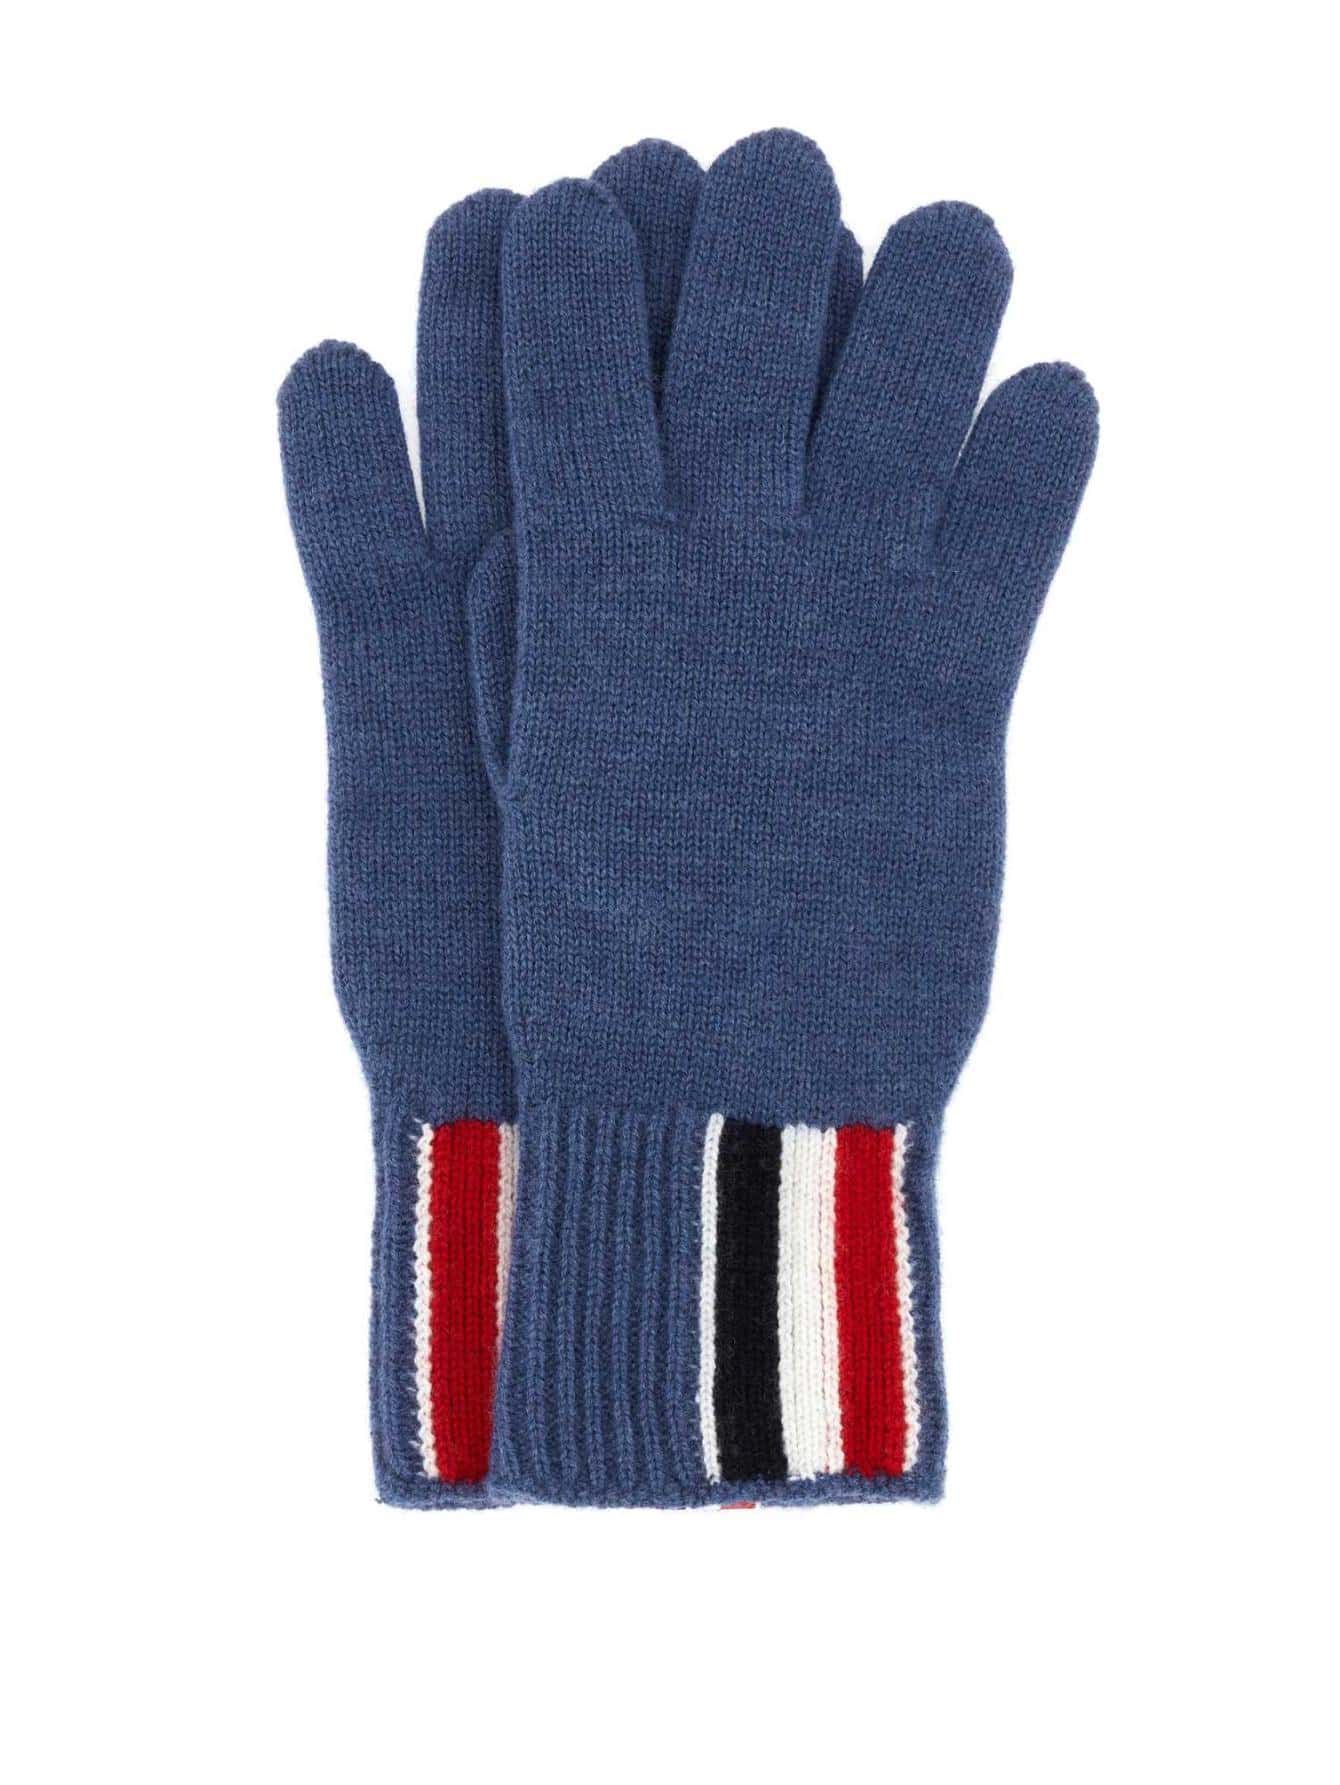 Мужские перчатки Thom Browne BLUE MKG011AY1018435, синий серый жилет для регби thom browne